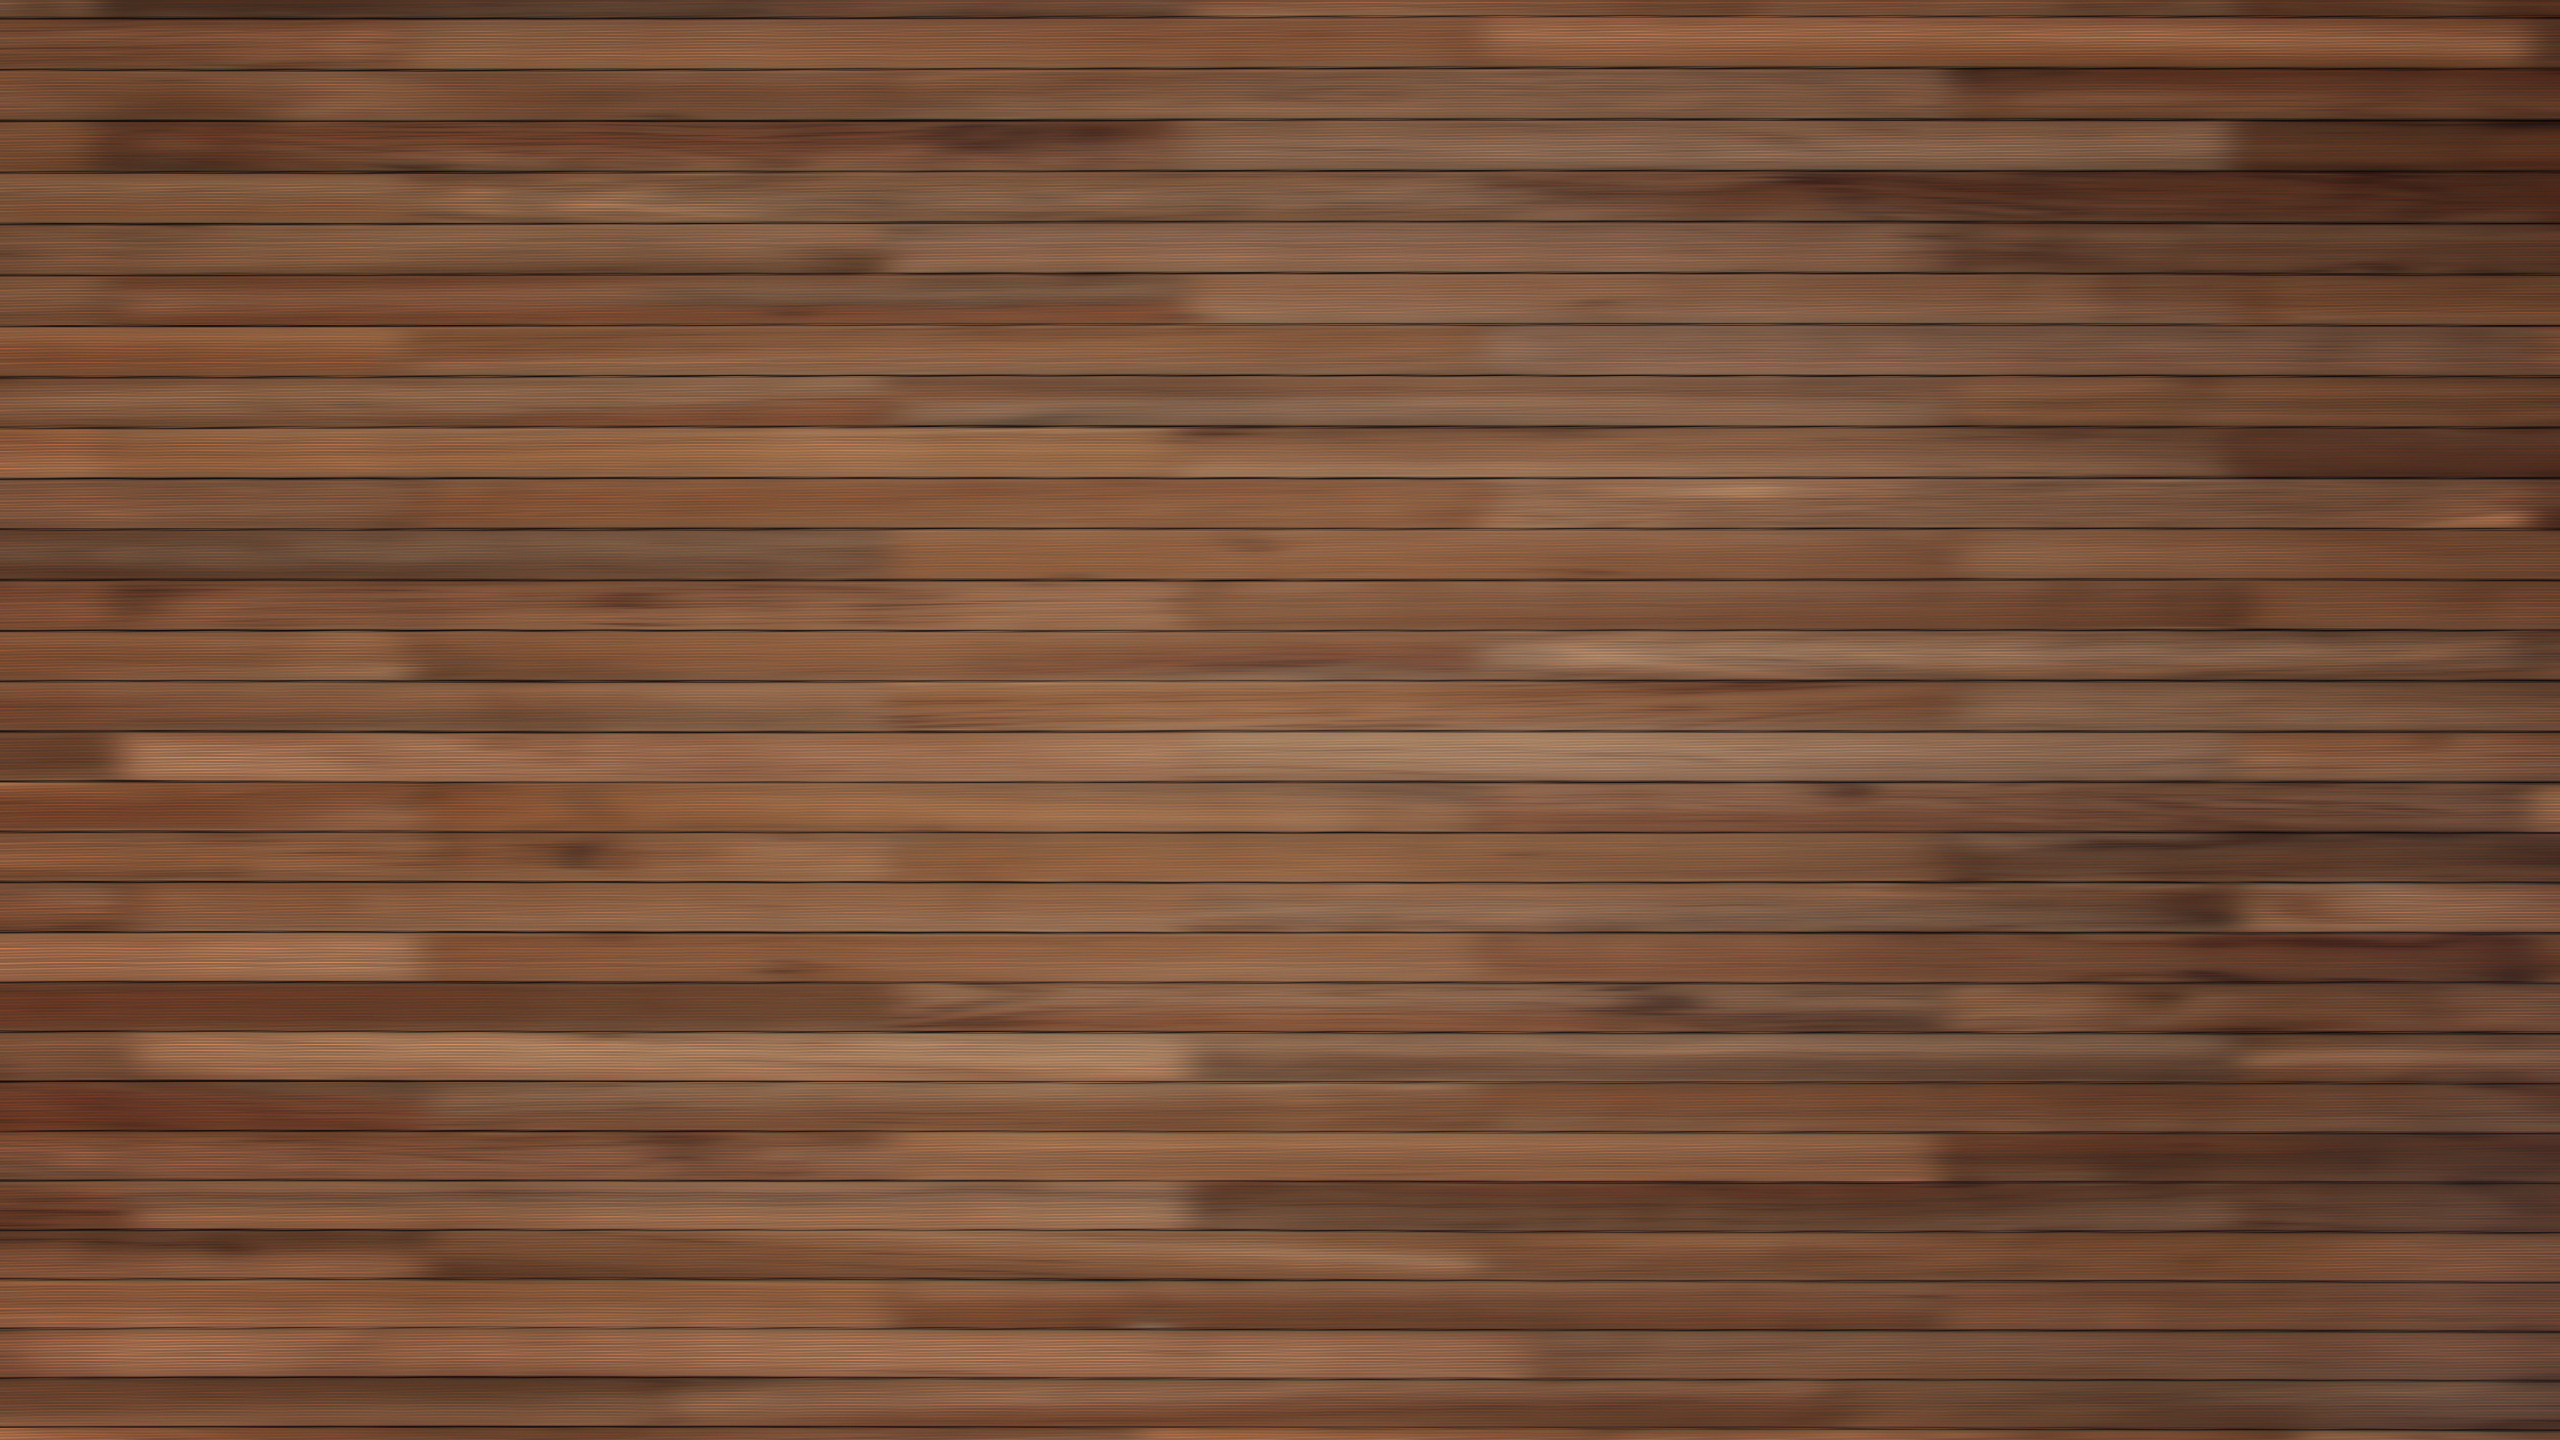 desk wallpaper,laminate flooring,wood flooring,floor,room,property  (#902293) - WallpaperUse